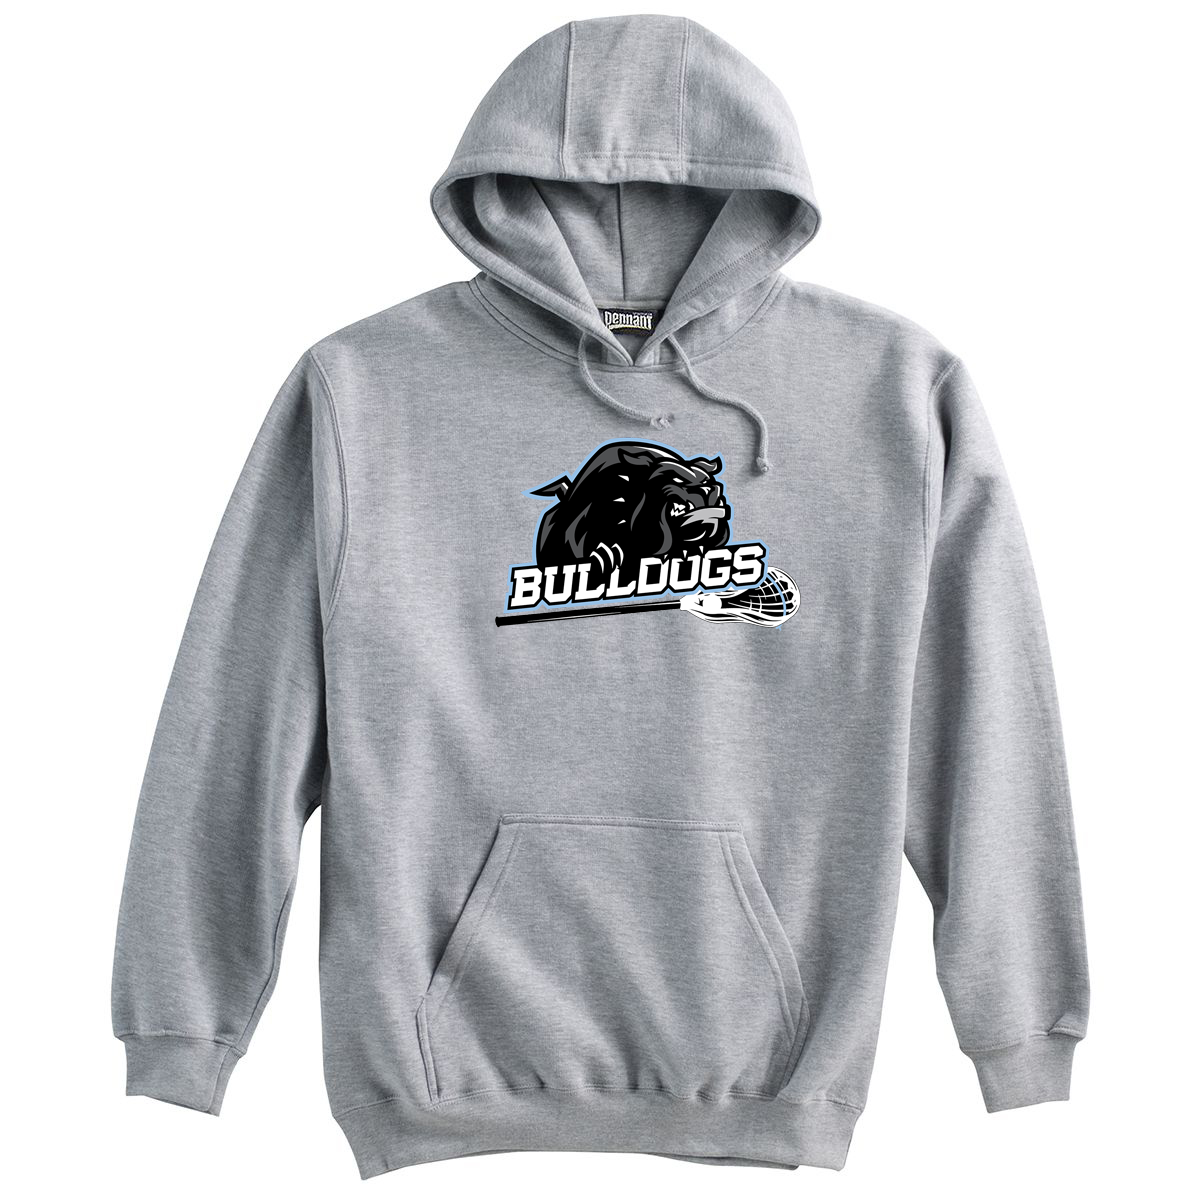 Centennial Bulldogs Sweatshirt